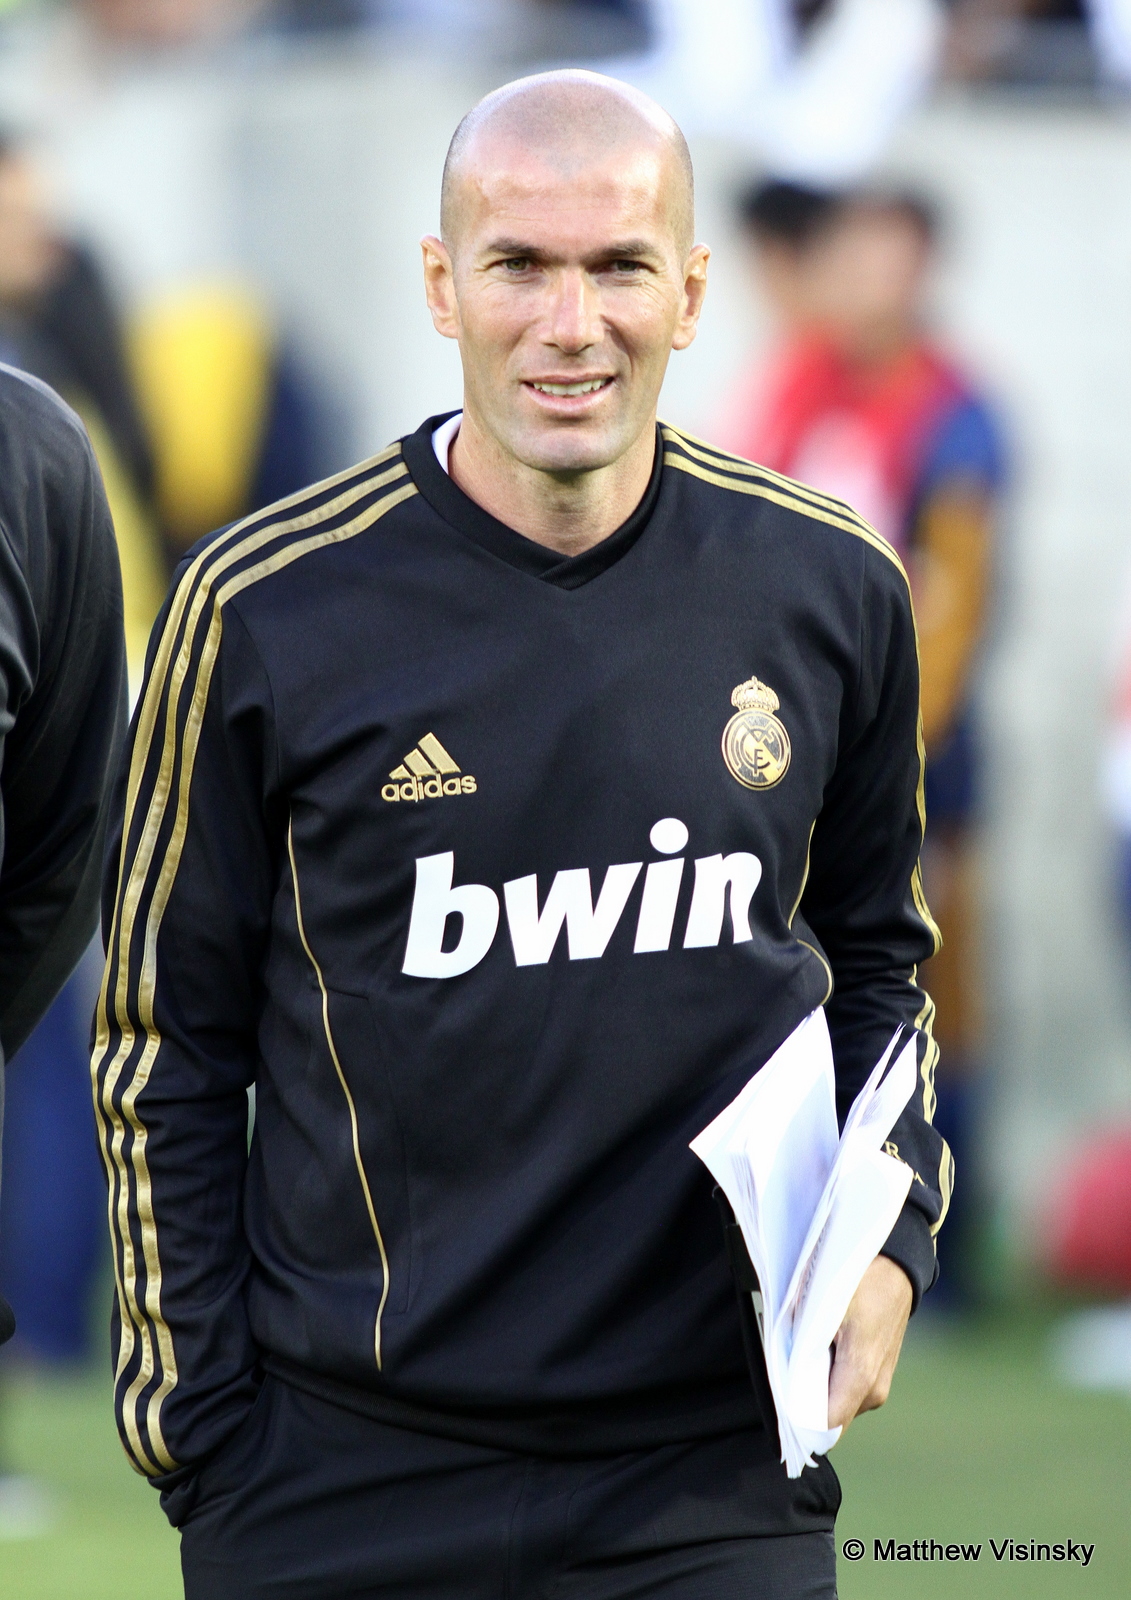 Zine Zidane